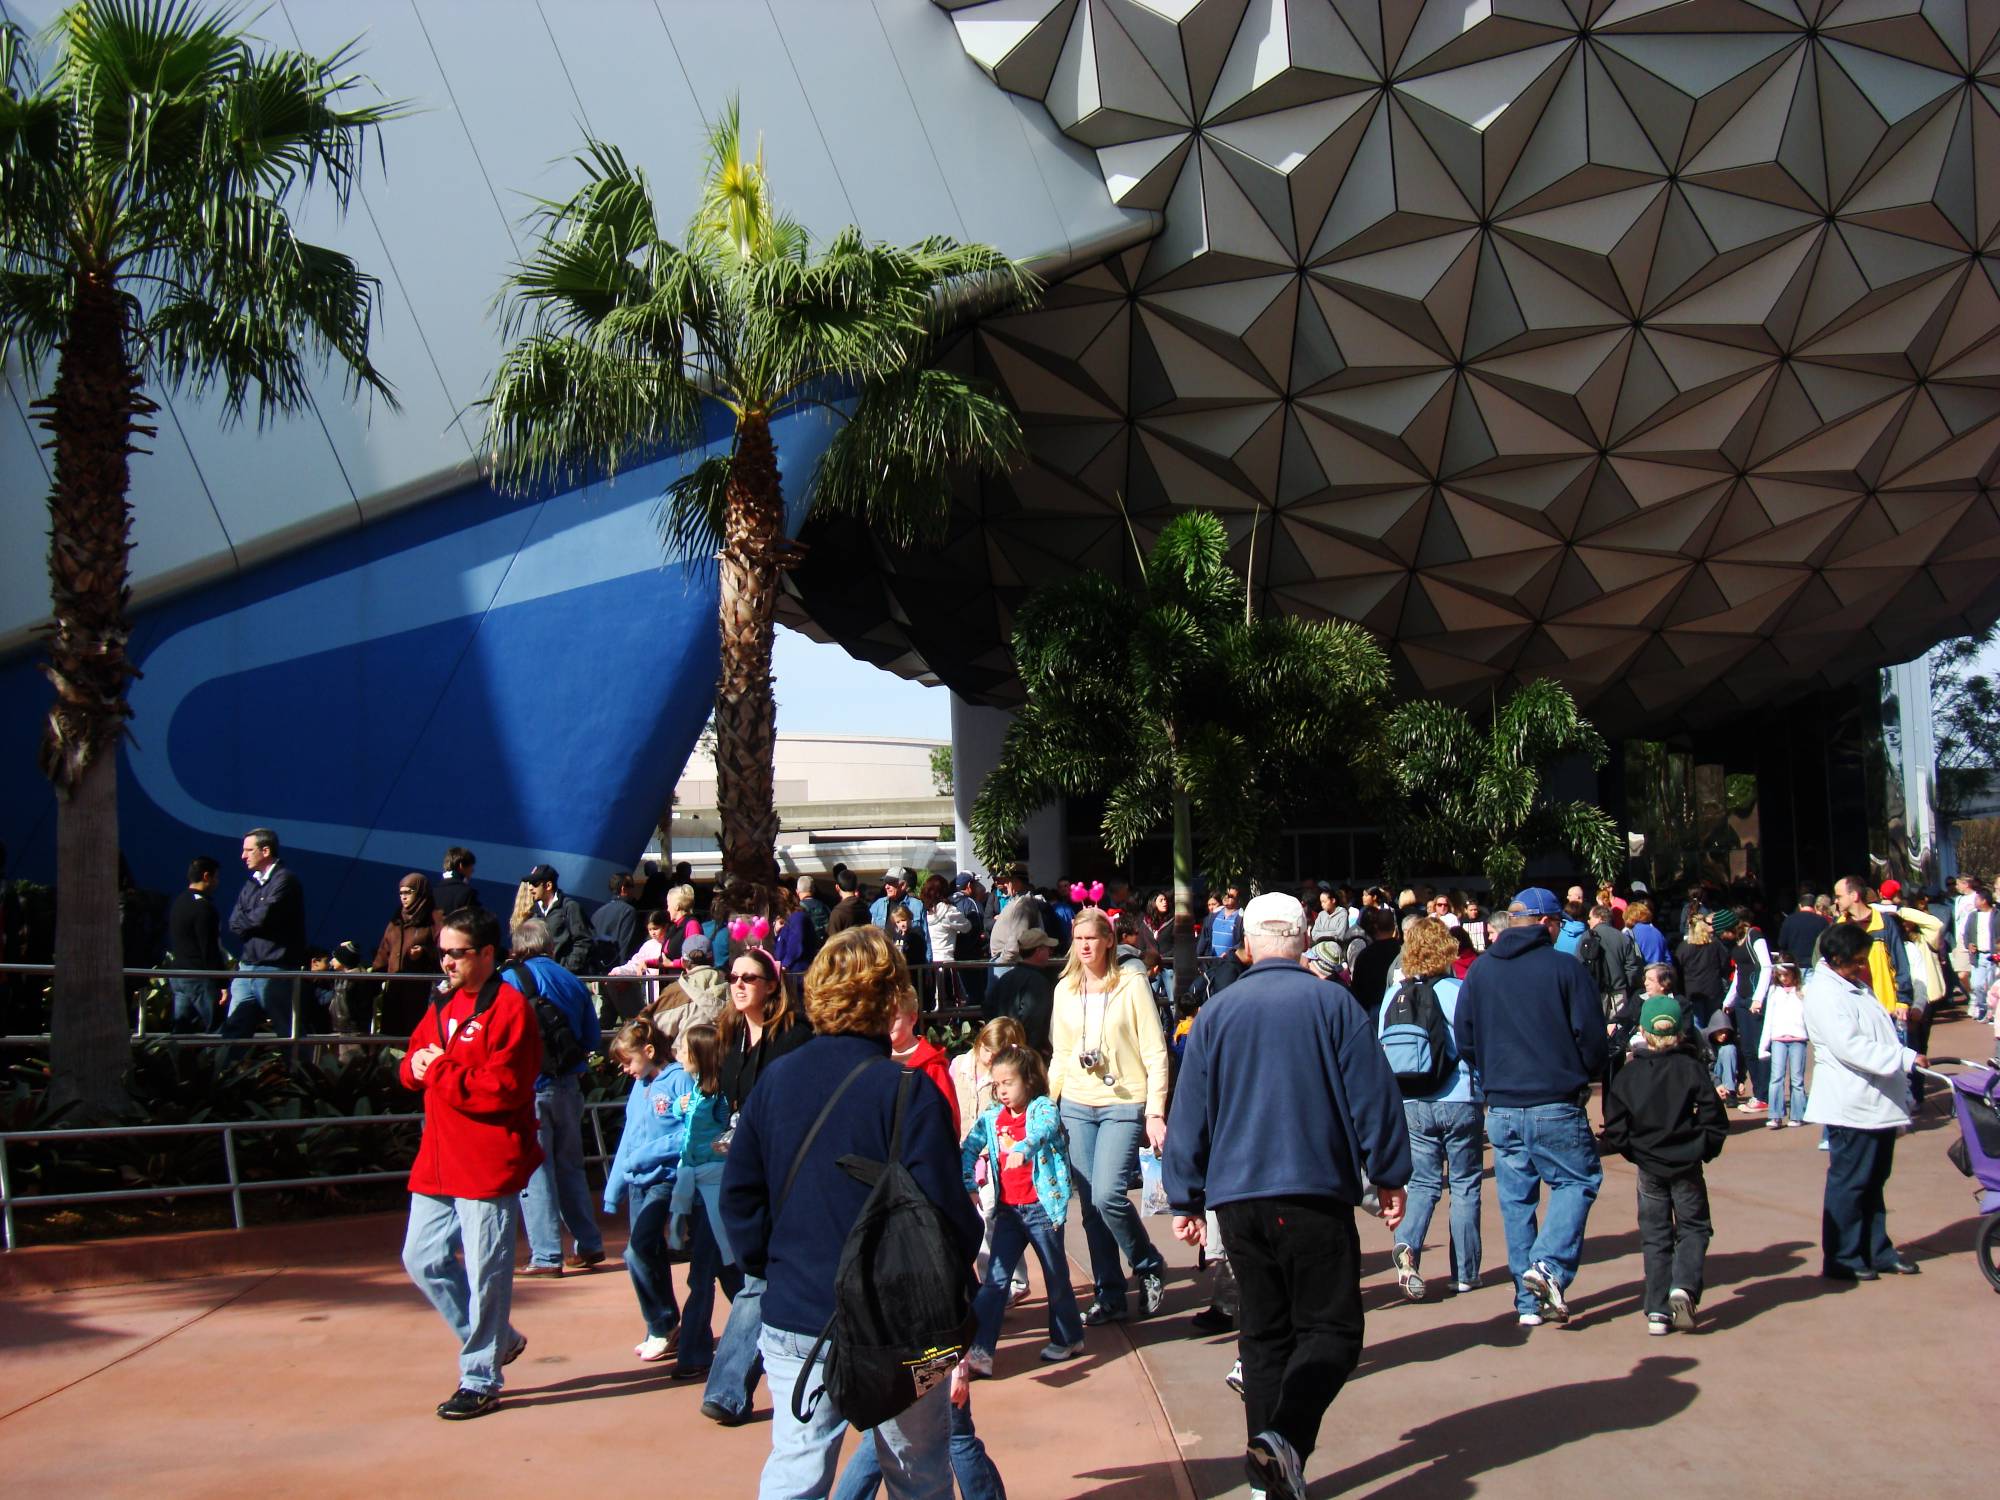 A holiday twist on the Walt Disney World magic | PassPorter.com